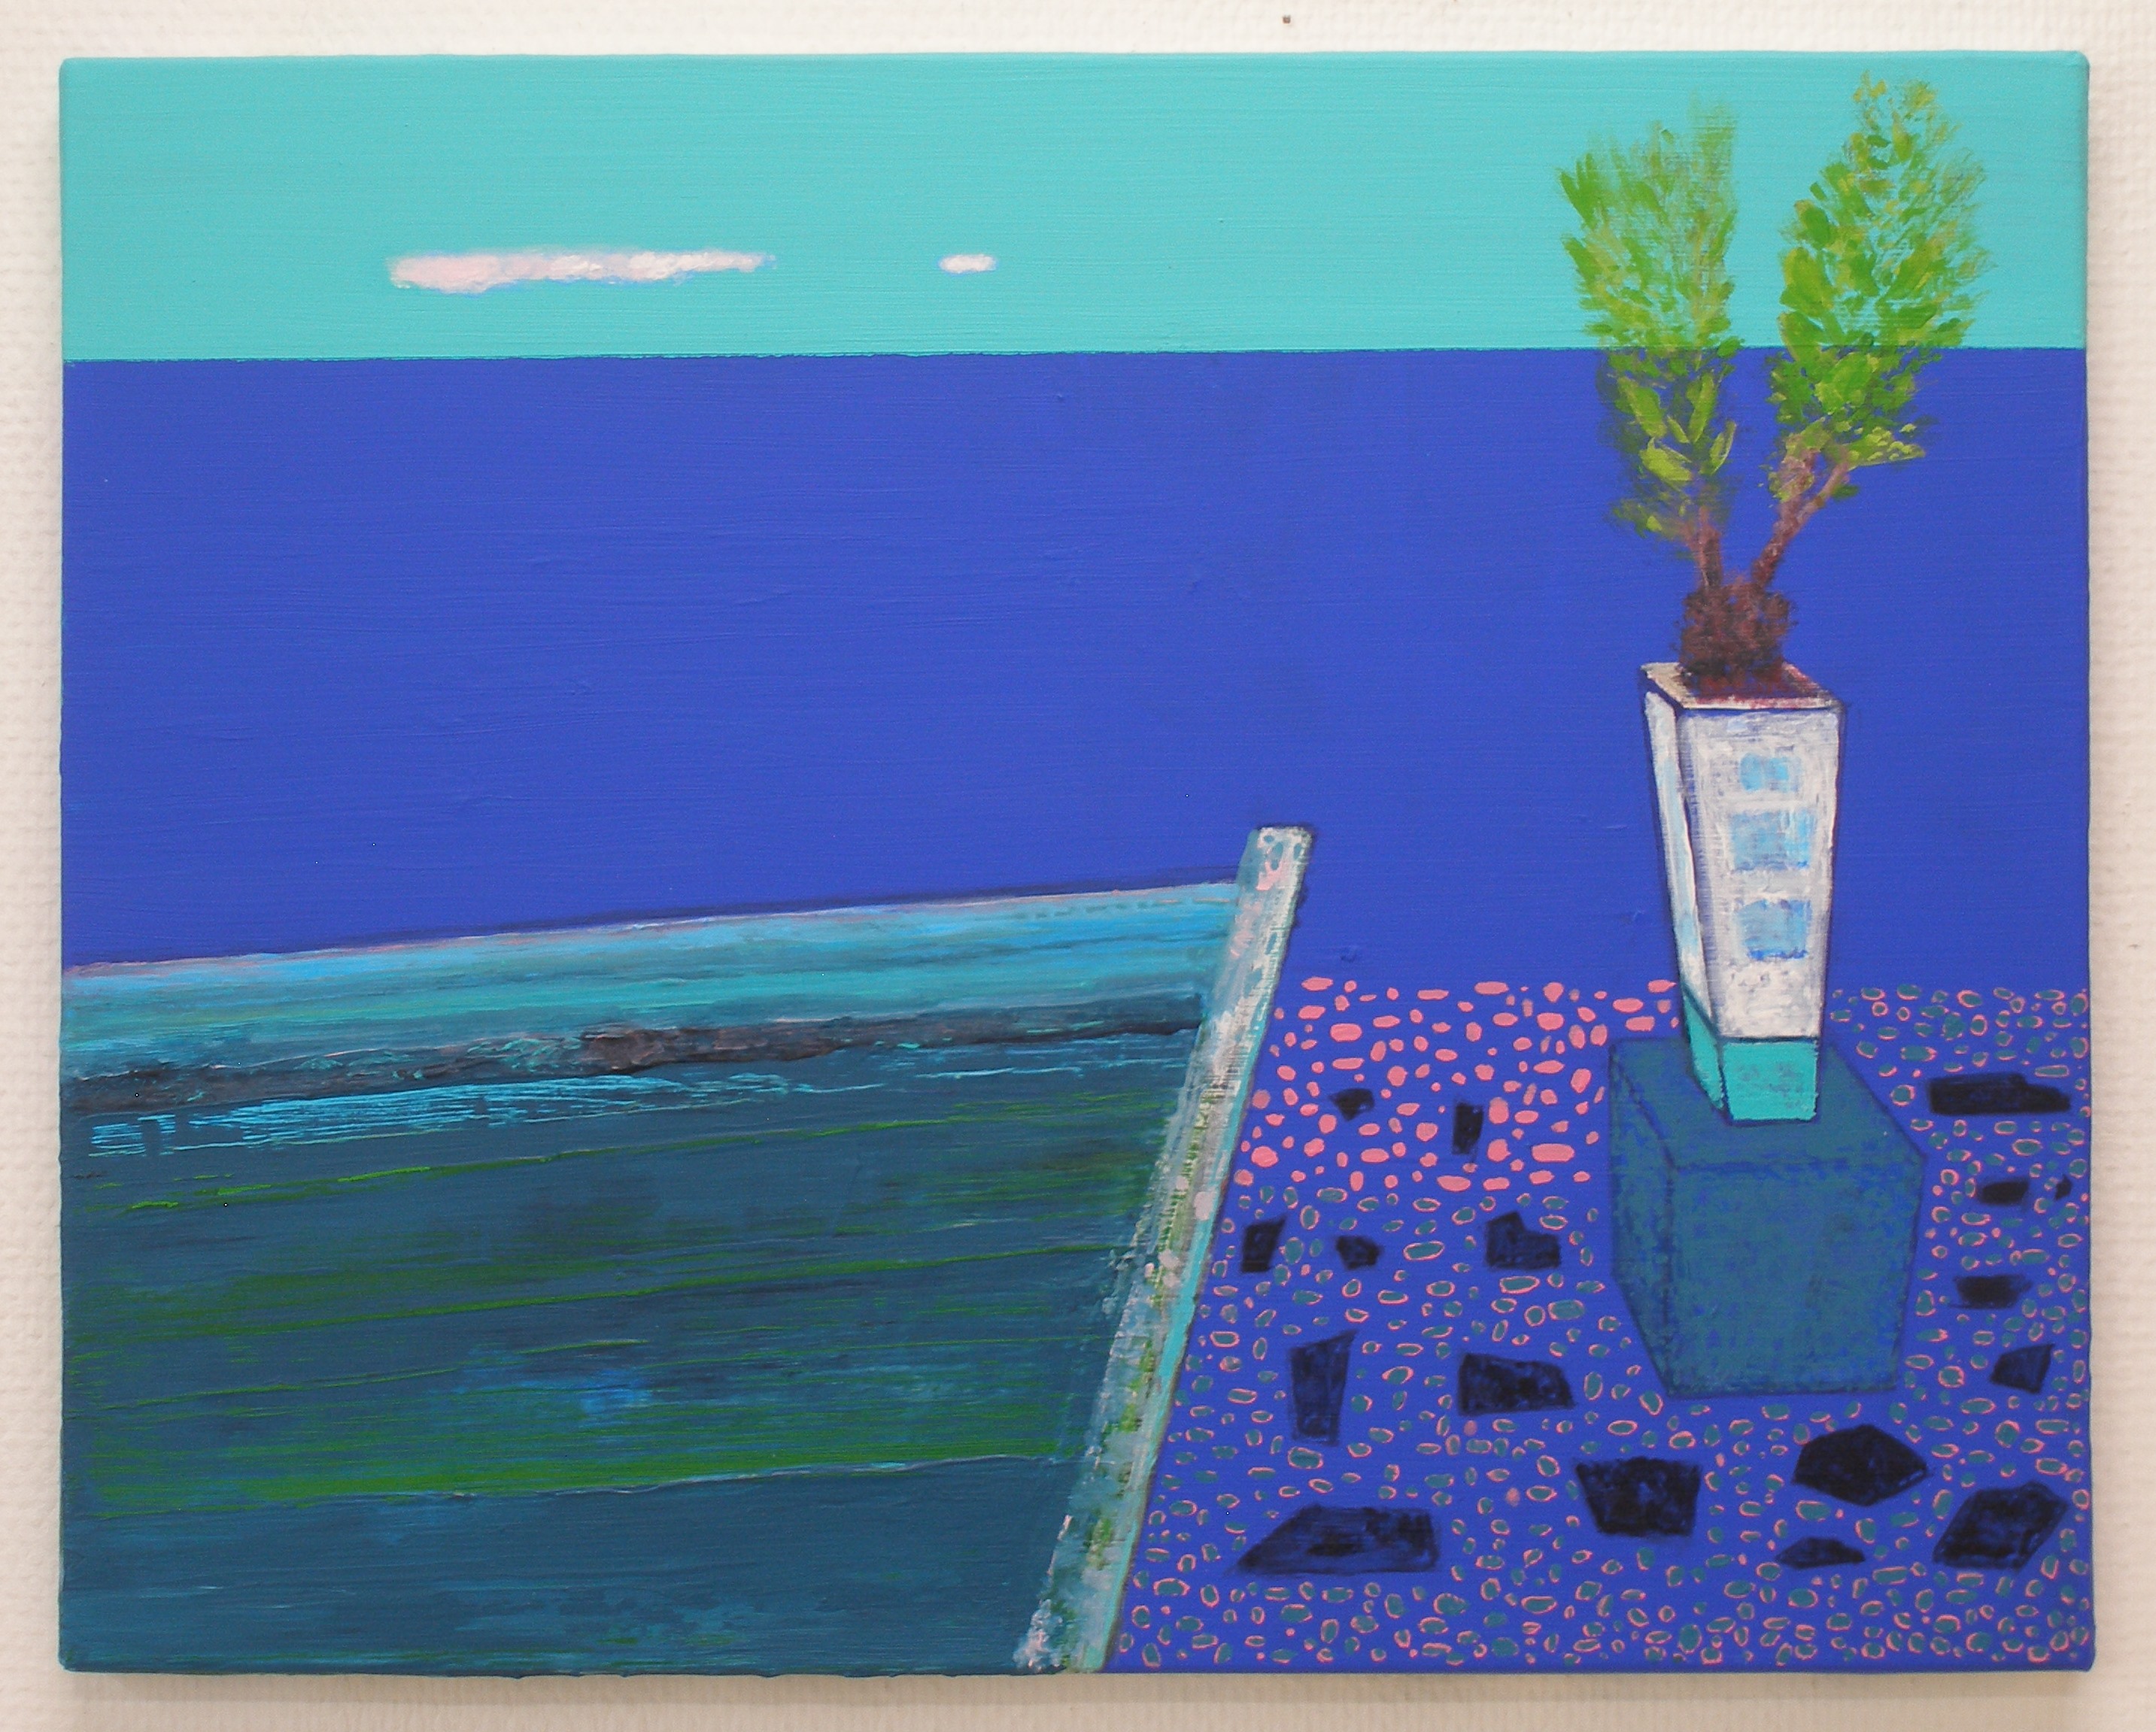 Shoreline 2, acrylic on canvas, 40x50cm